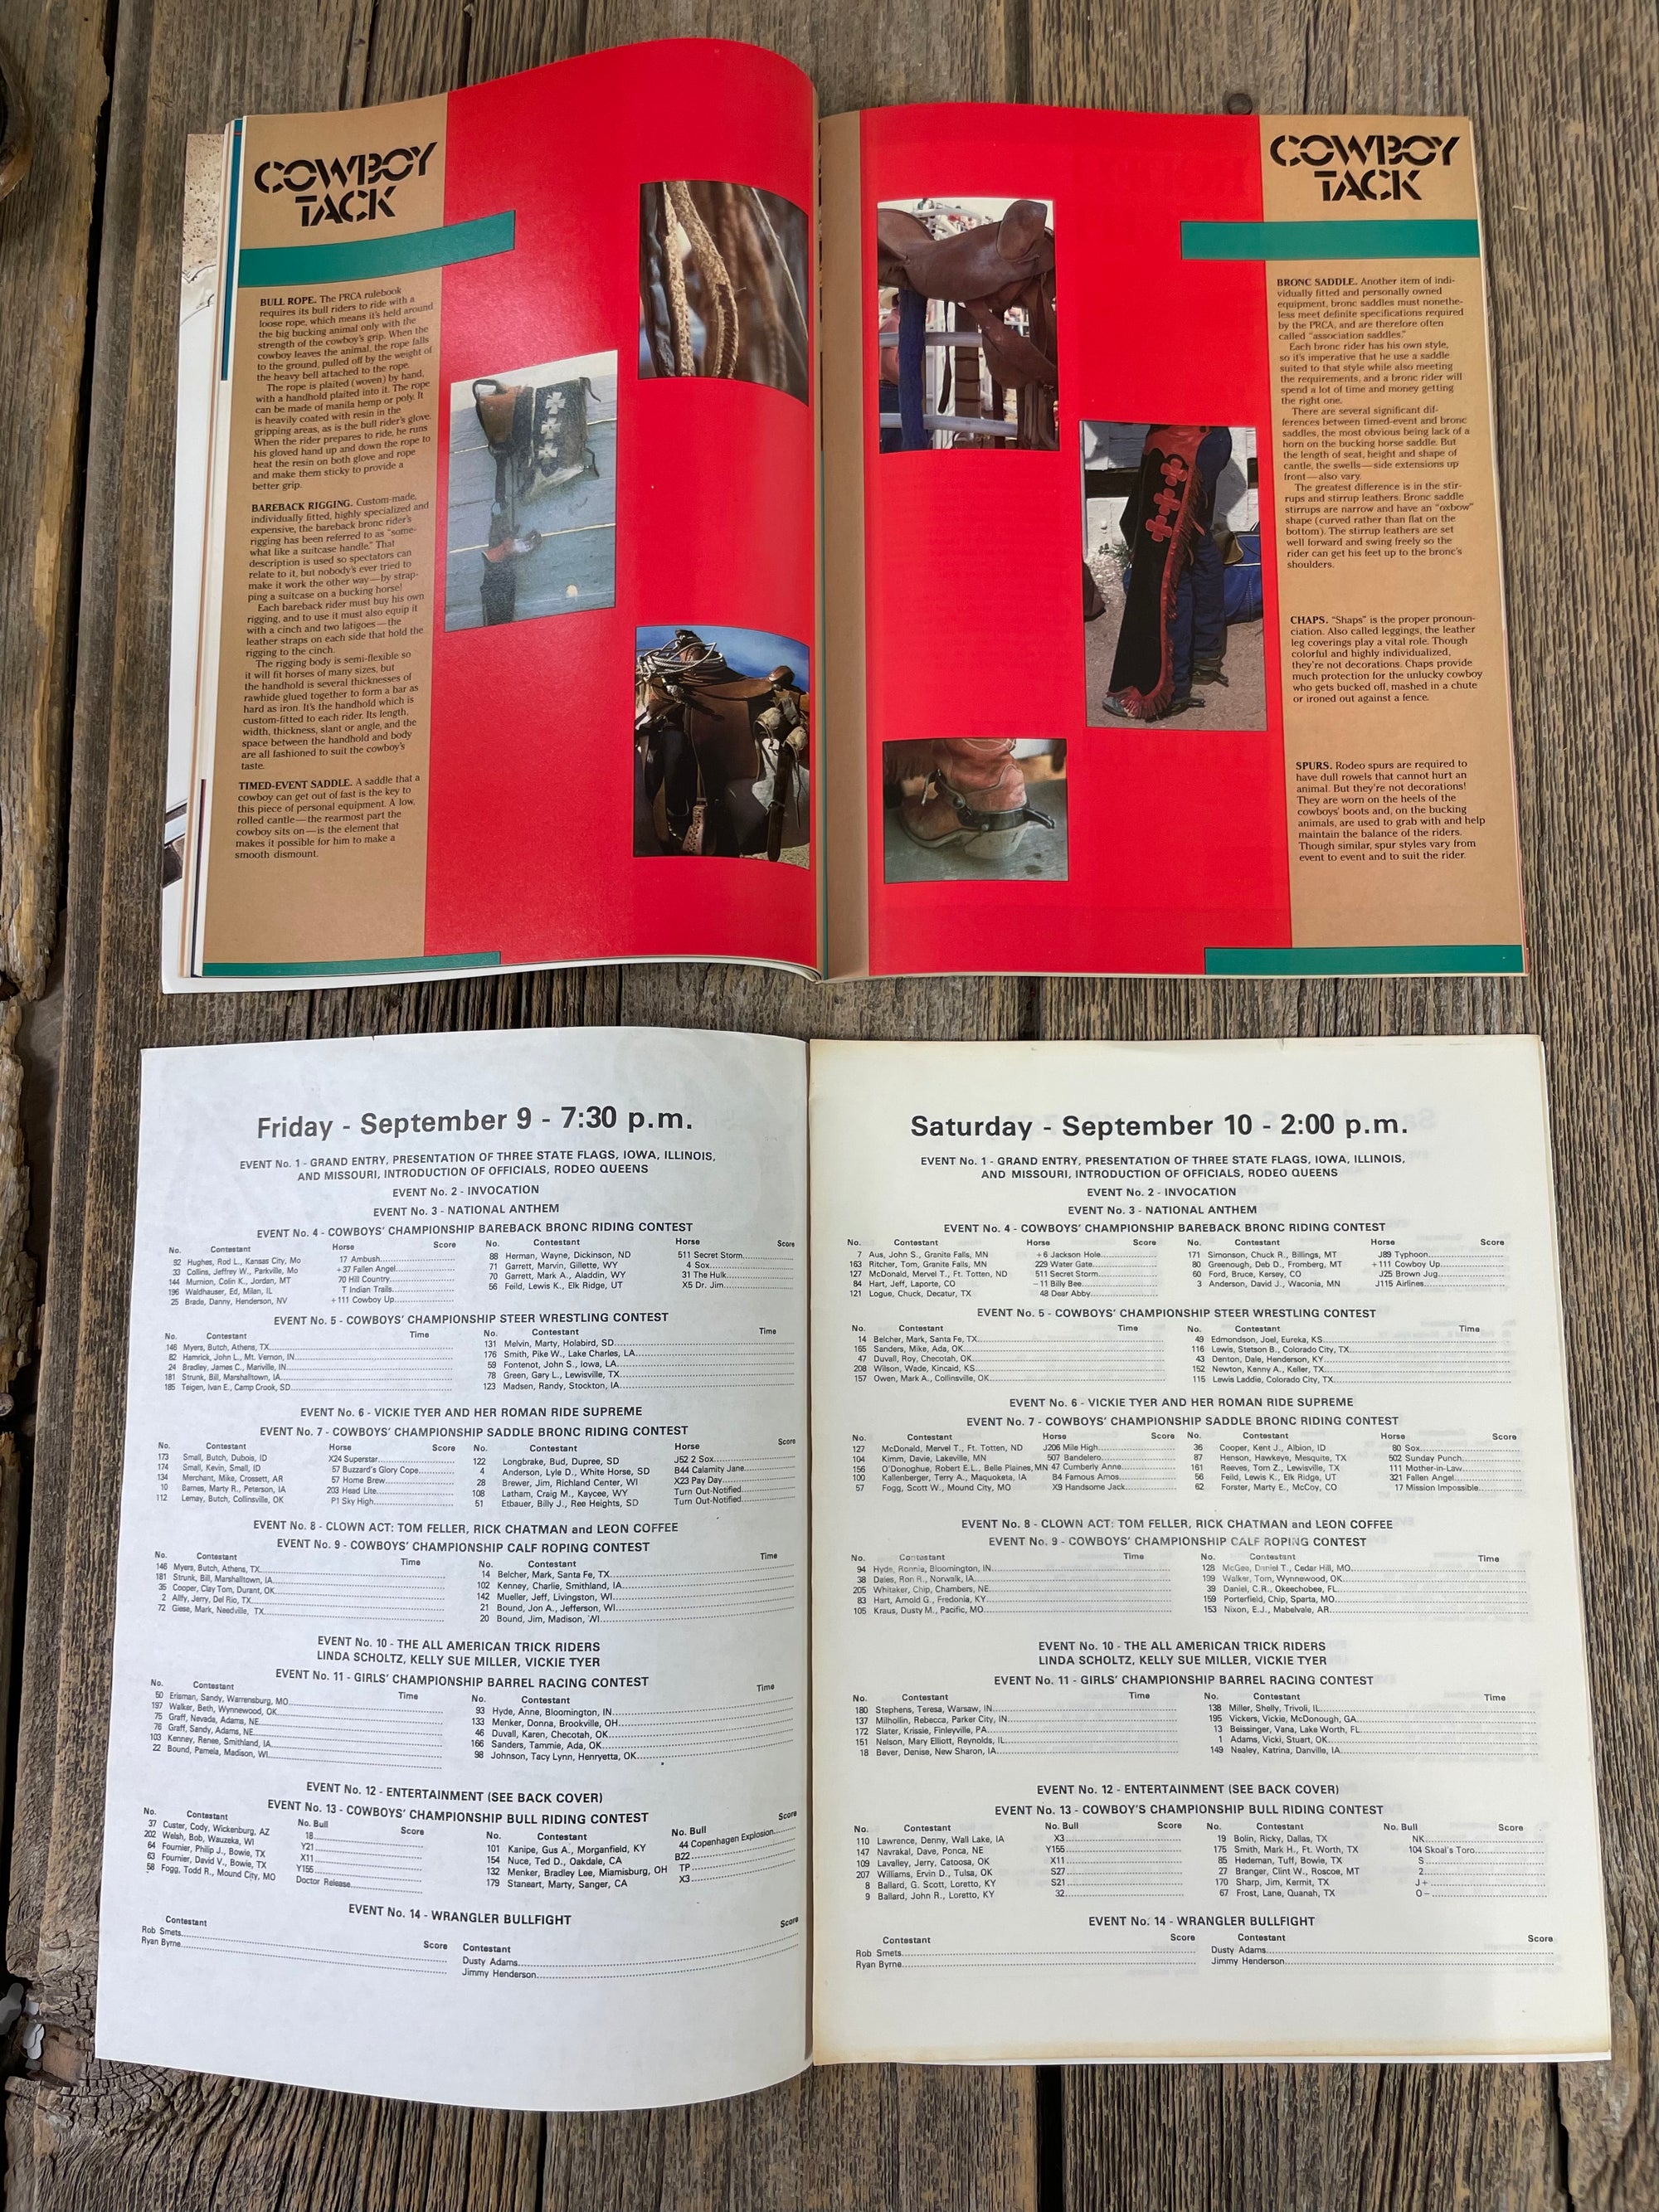 Tri State Rodeo Program 1988